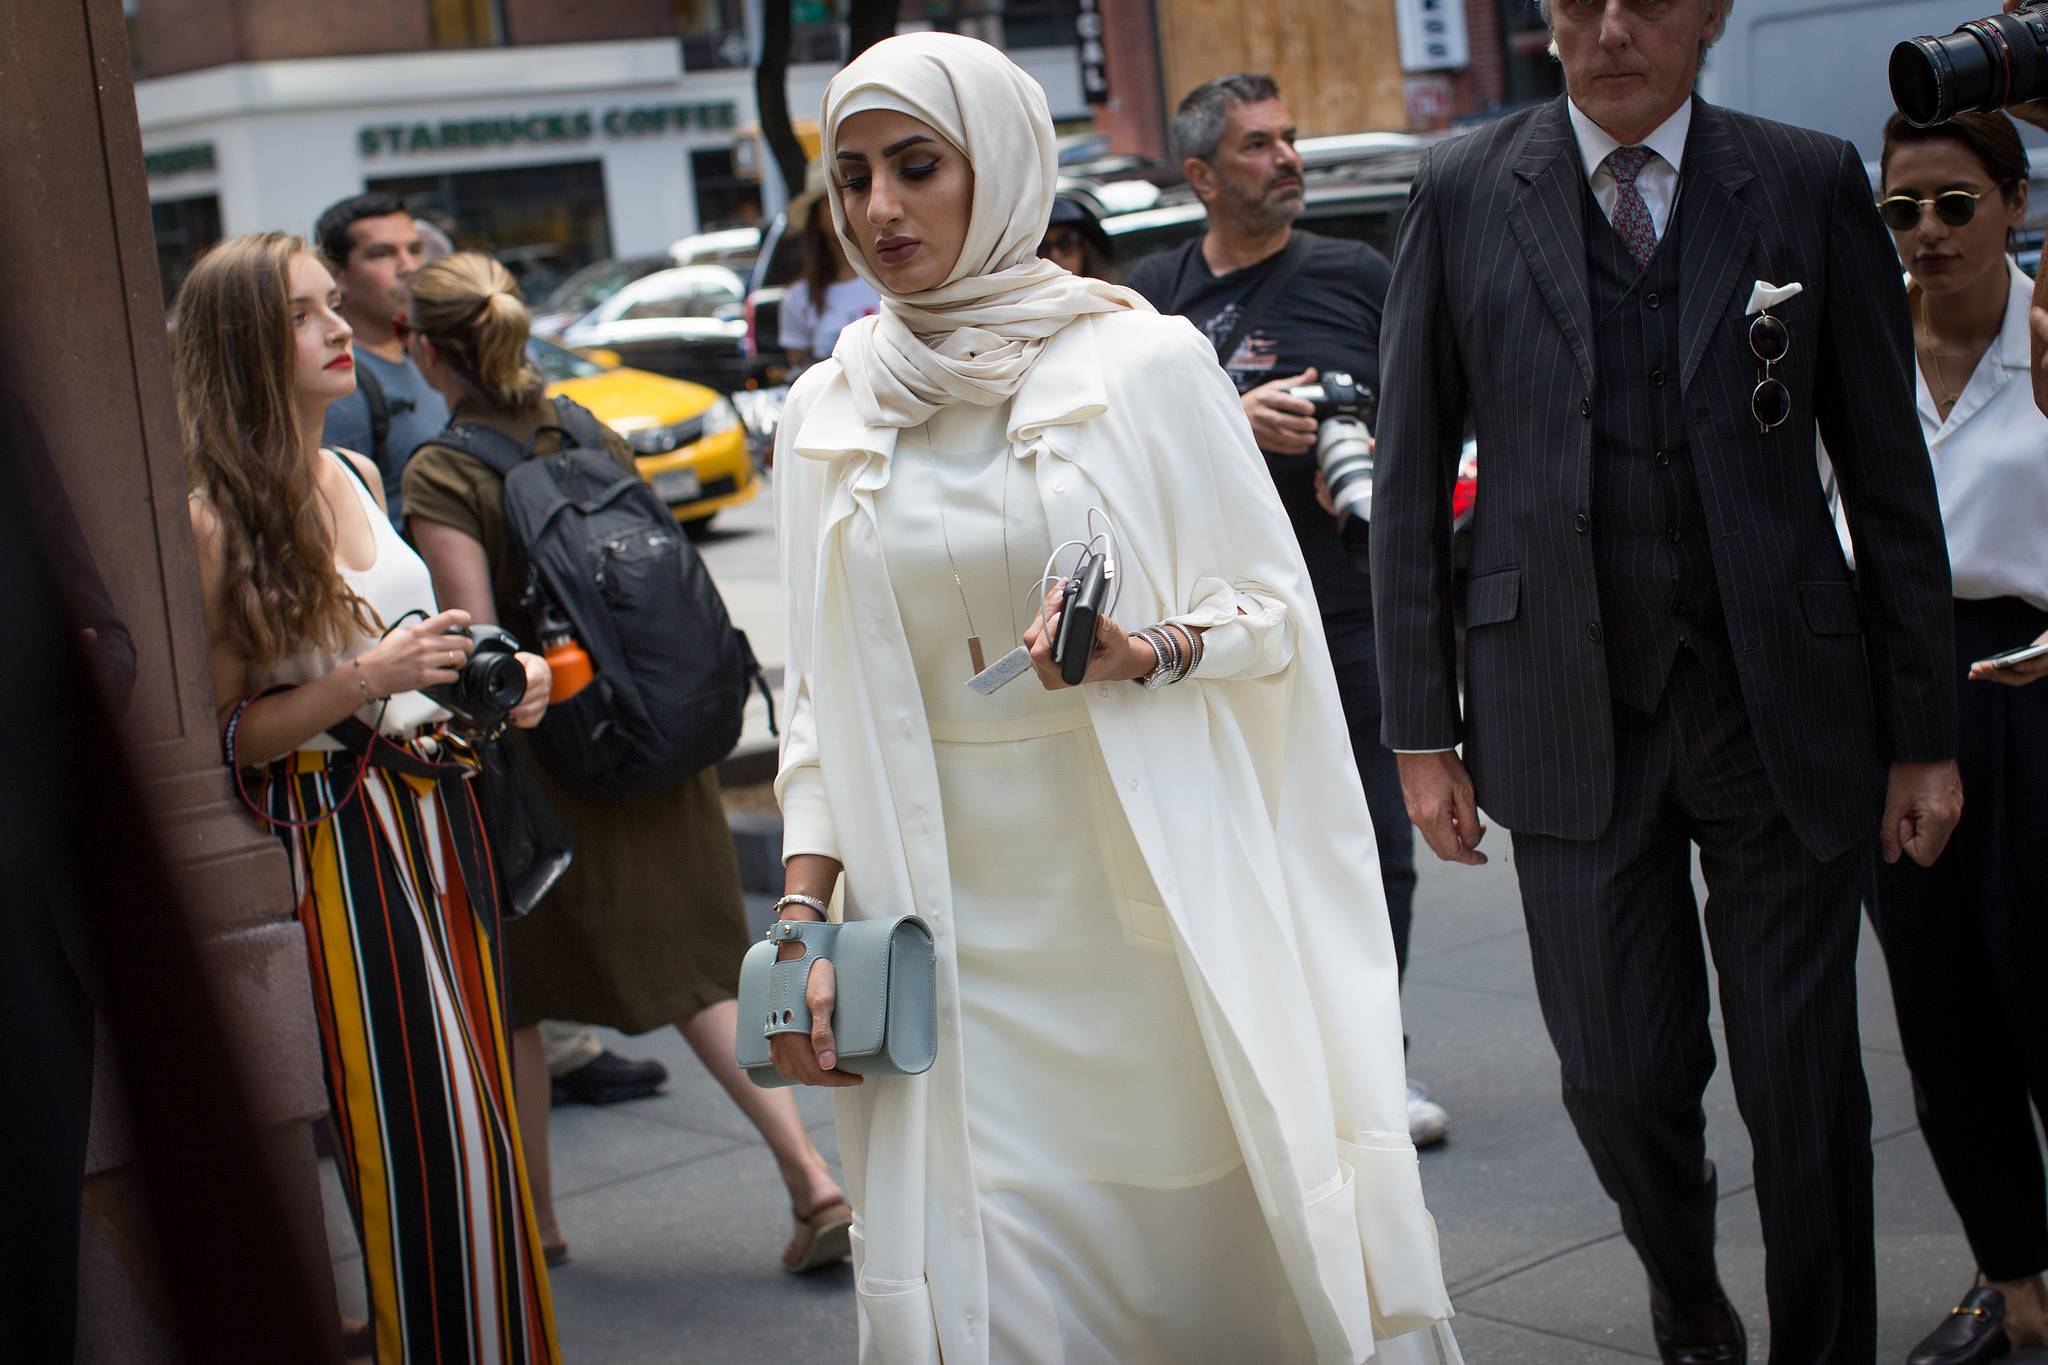 How abayas have entered mainstream fashion